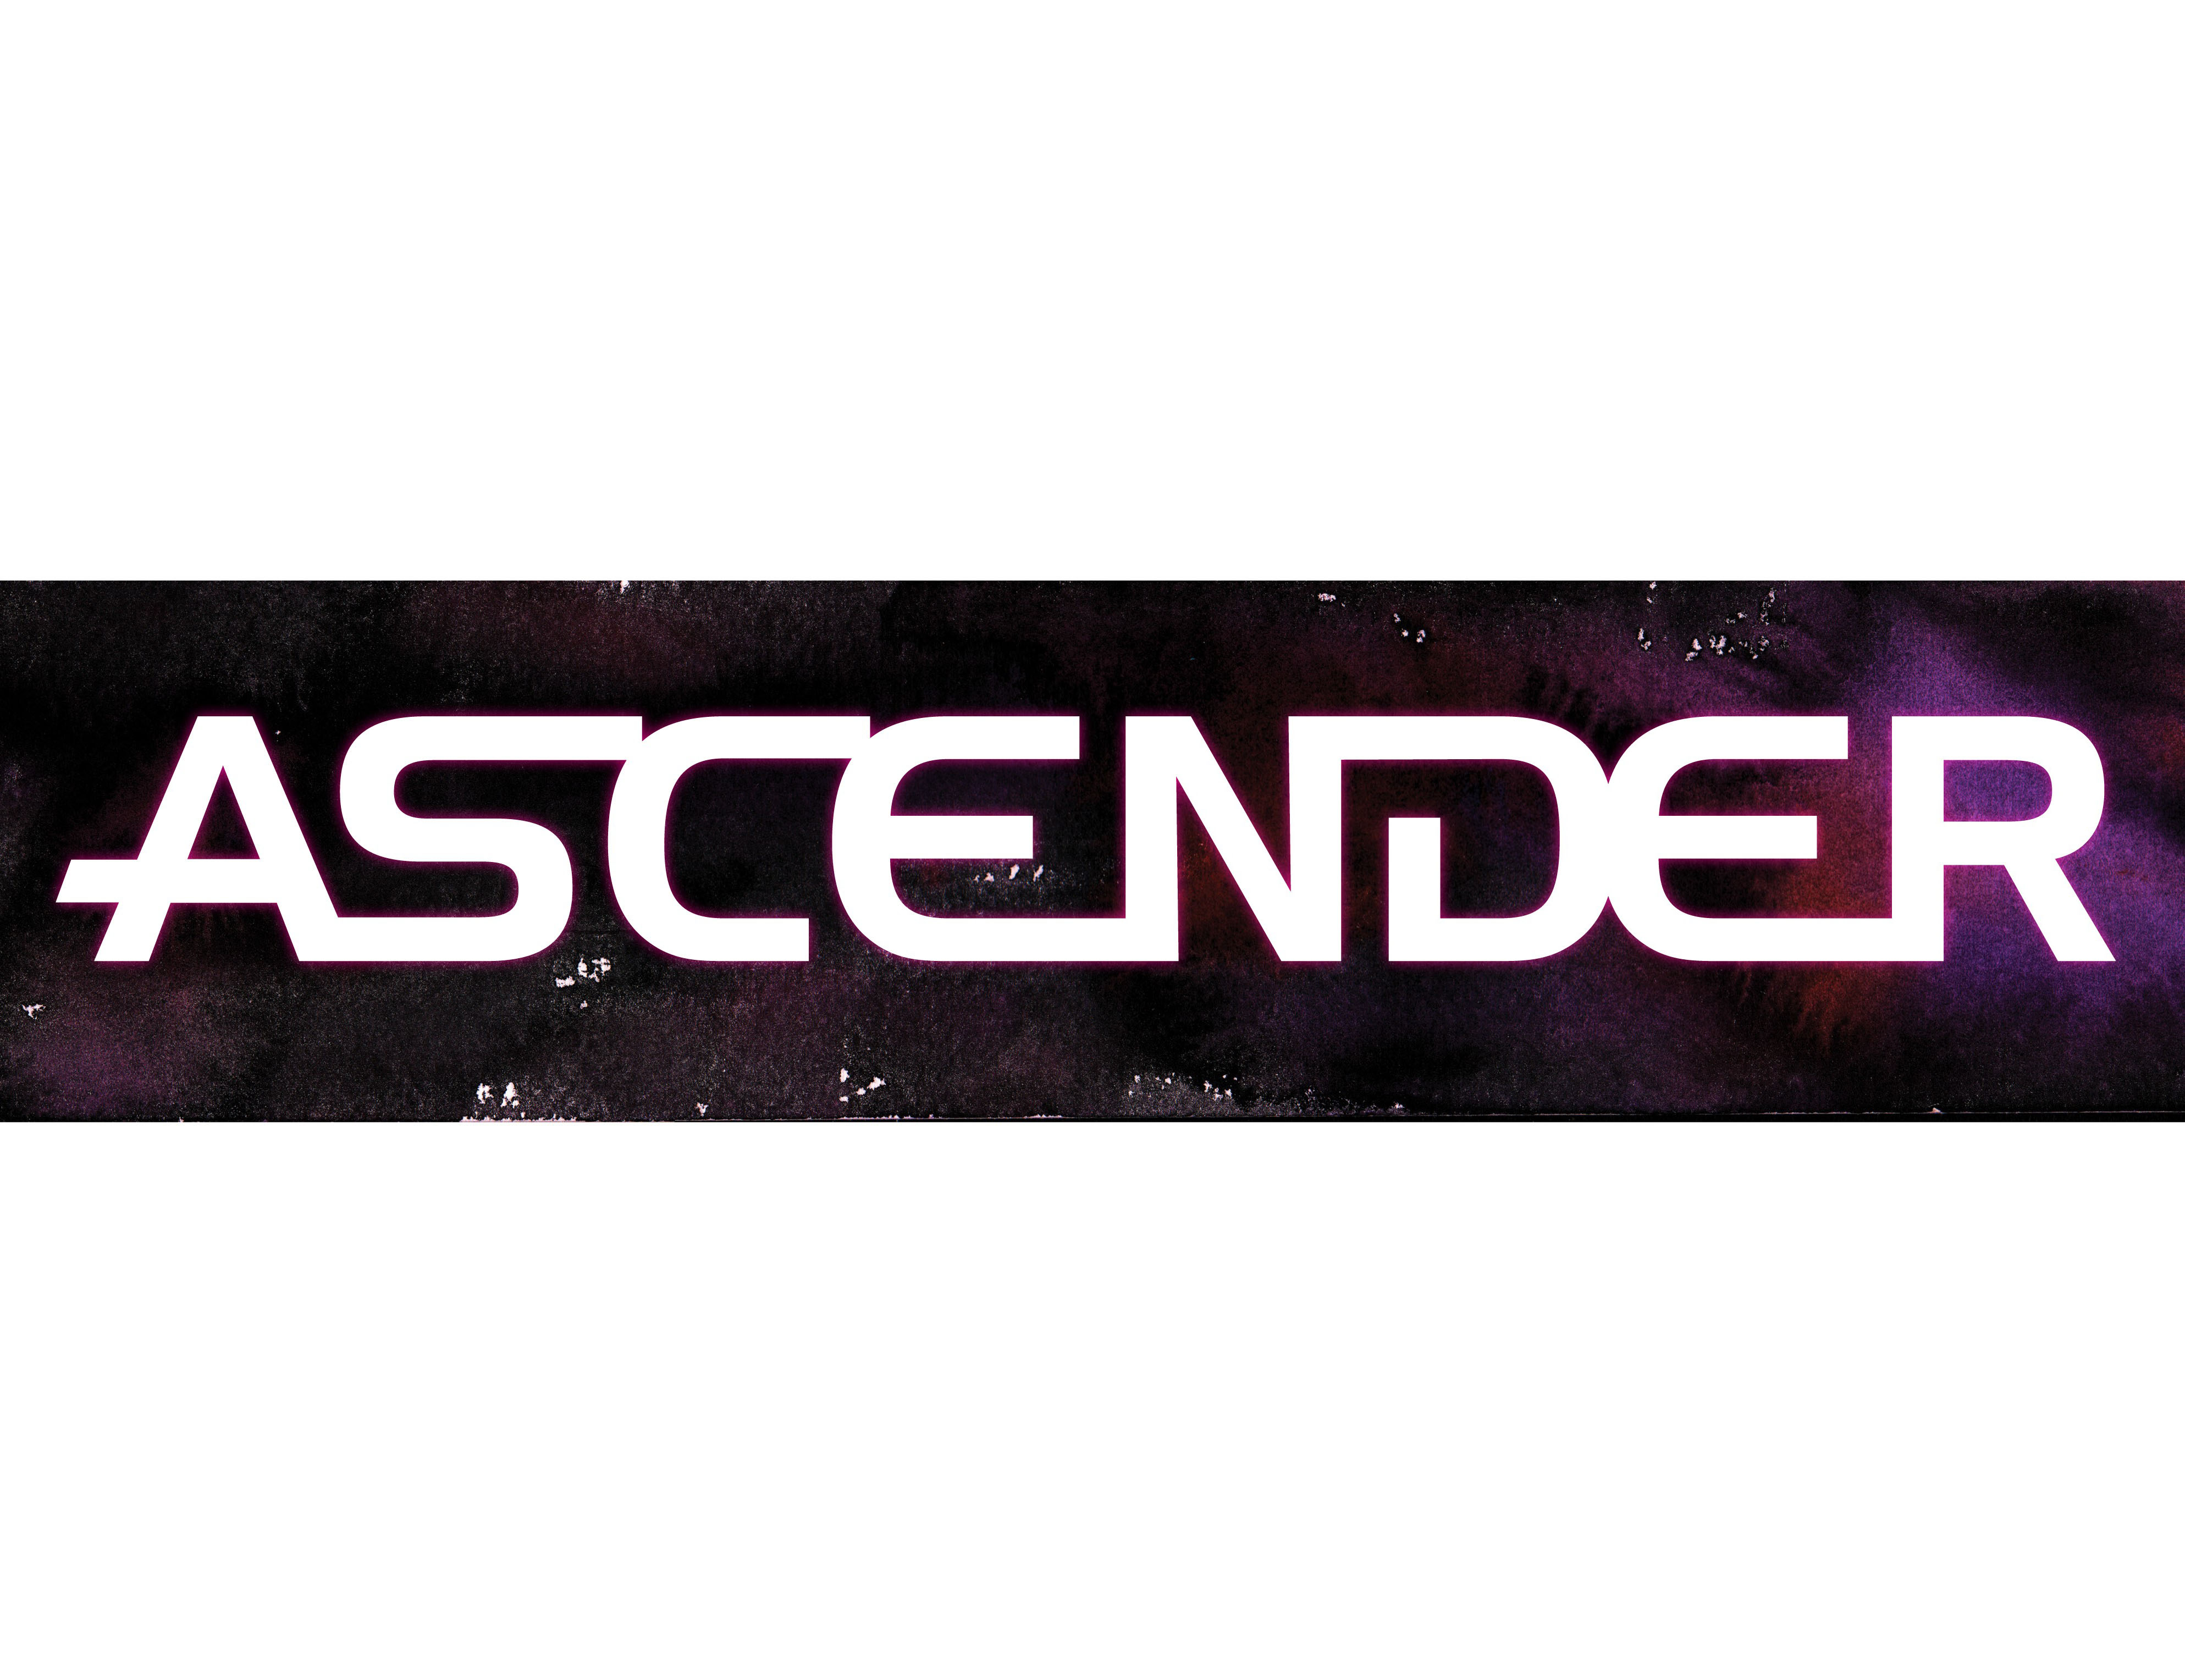 Ascender (2019) Chapter 1 Page 4